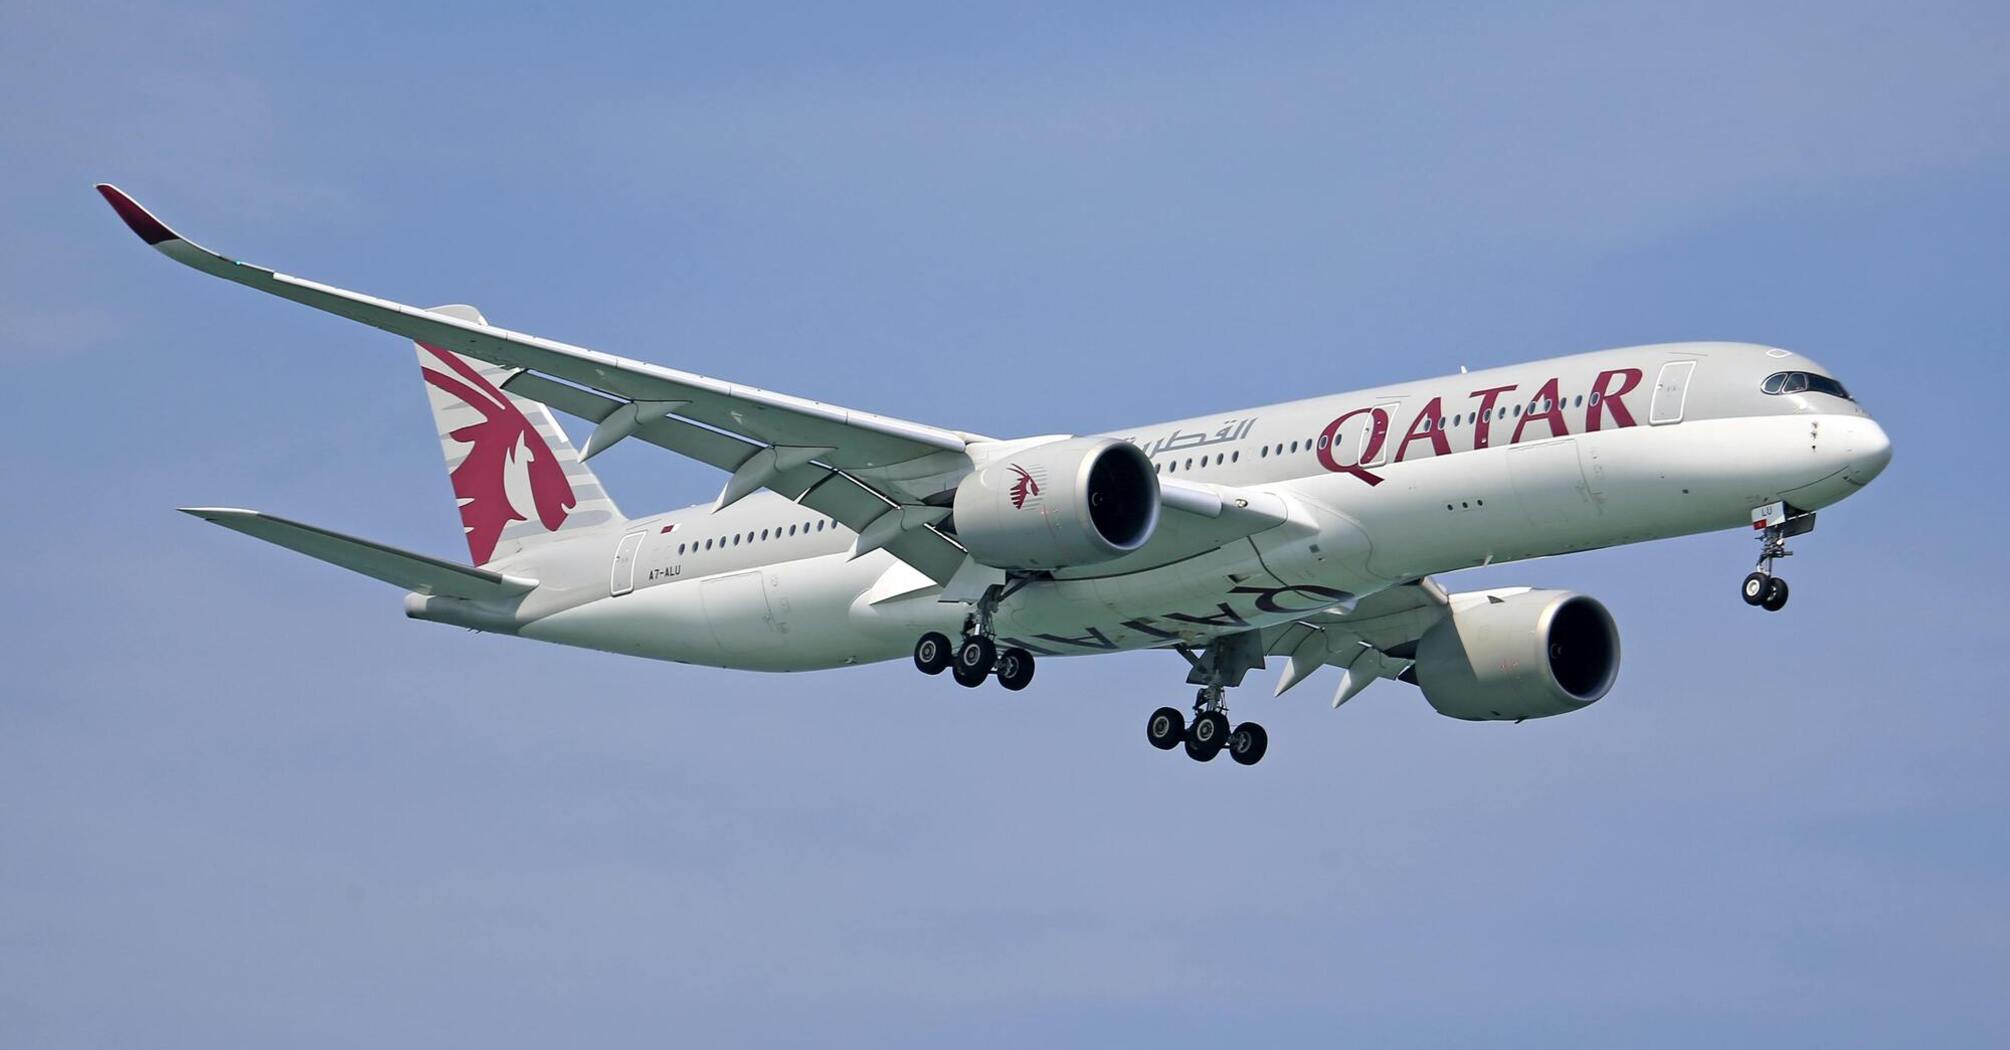 Qatar Airways and Qatar Tourism present Qatar as a leading tourist destination